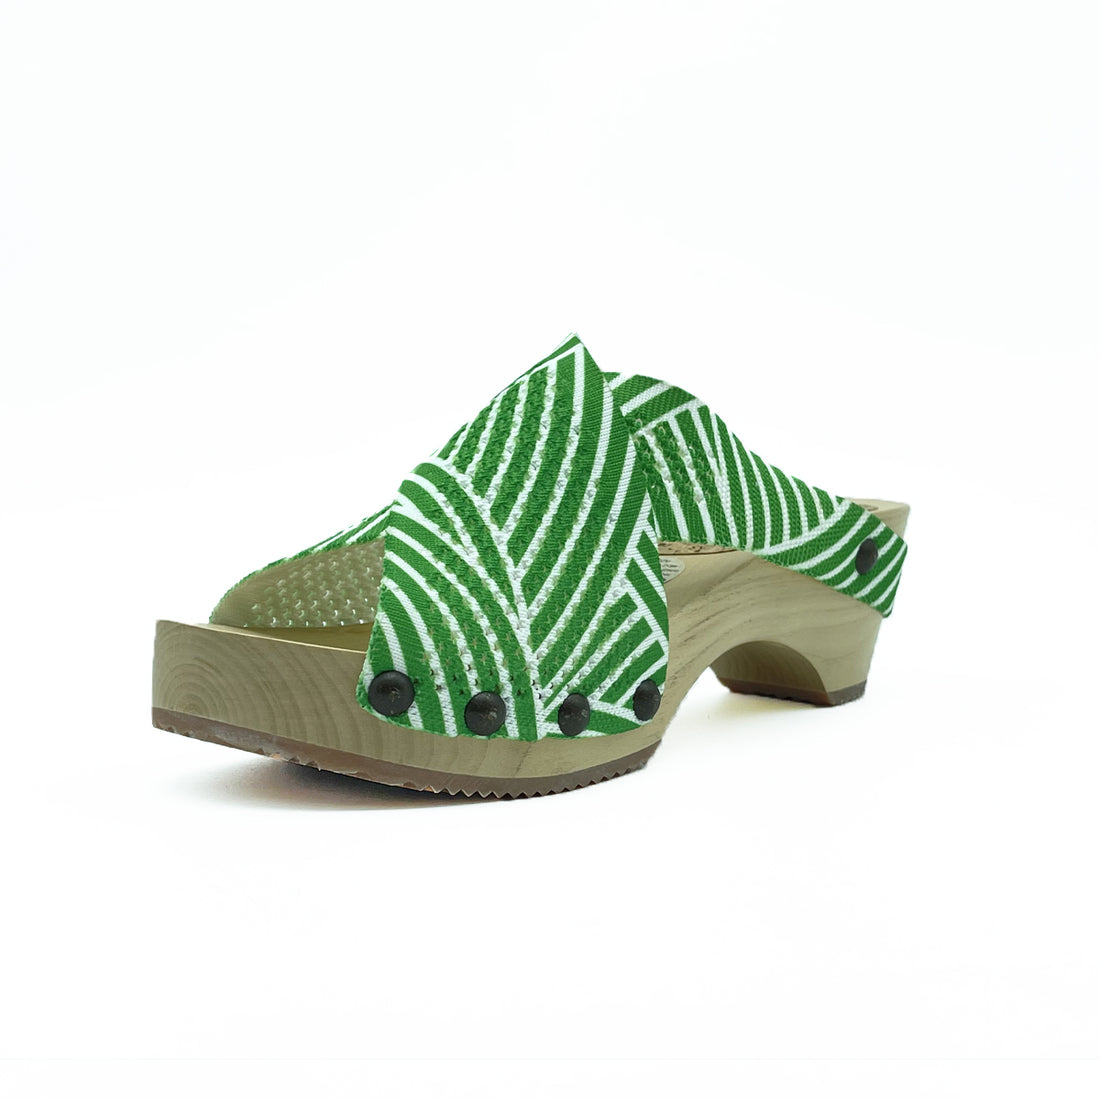 Libby Hill So Matcha Platform Clog Sandals